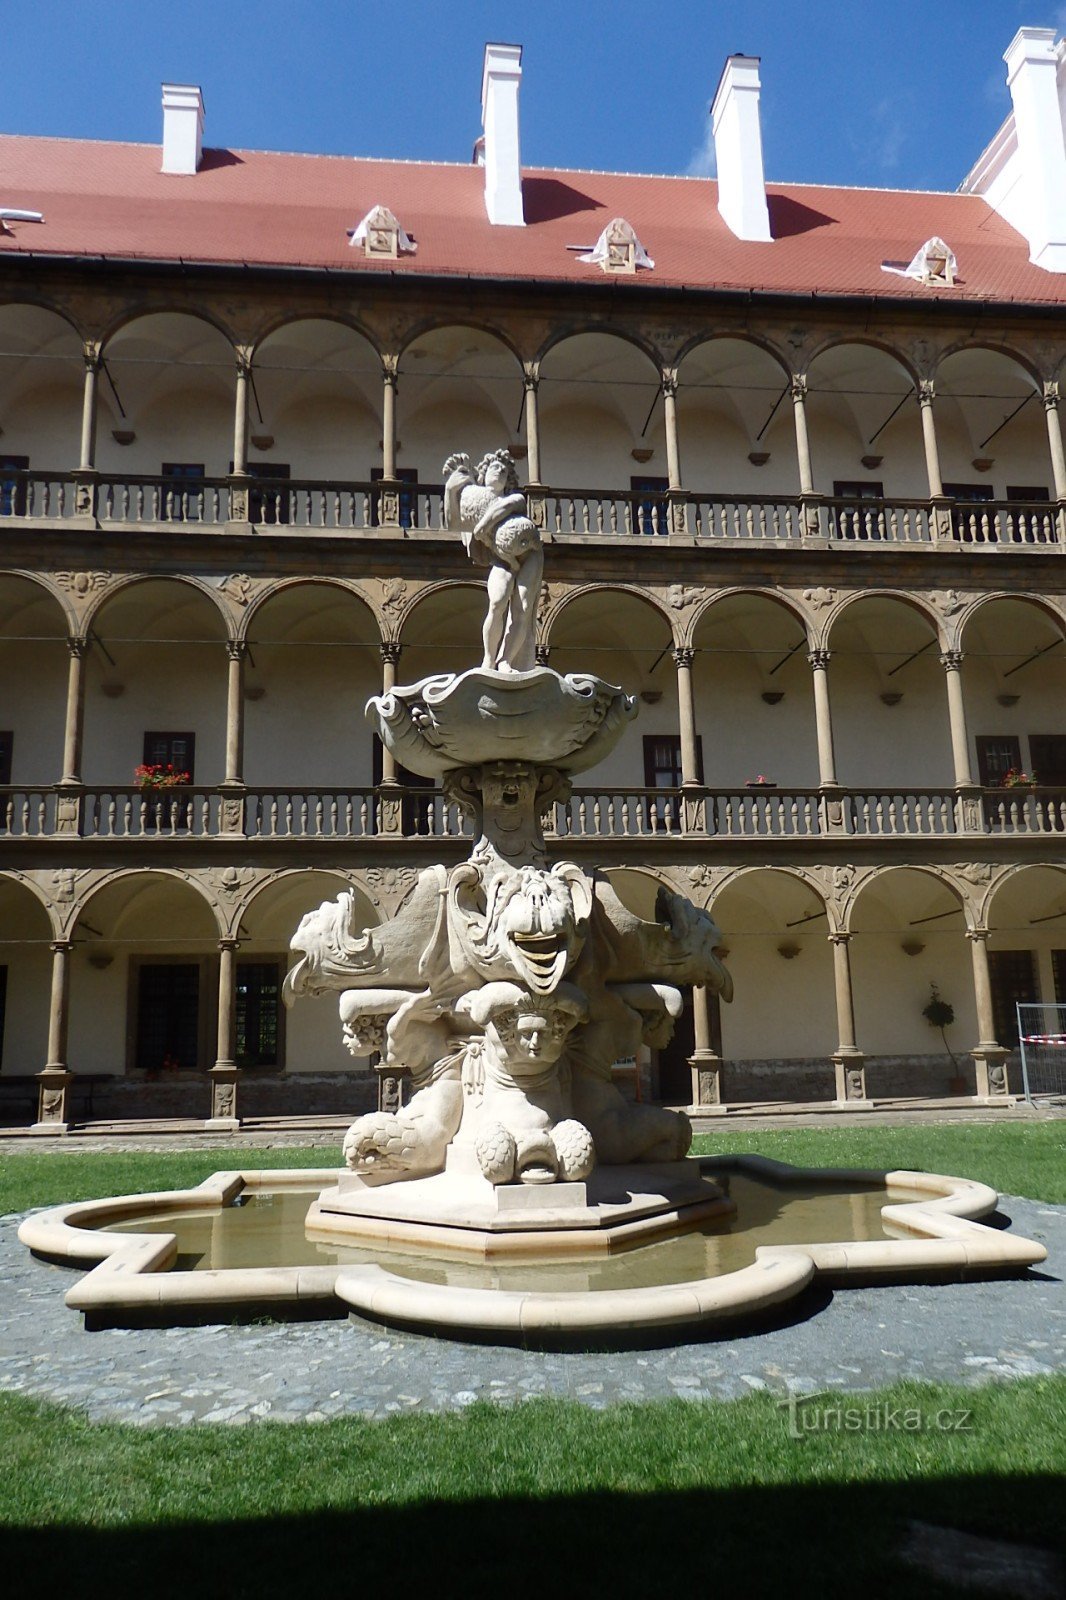 Bučovice renaissance castle